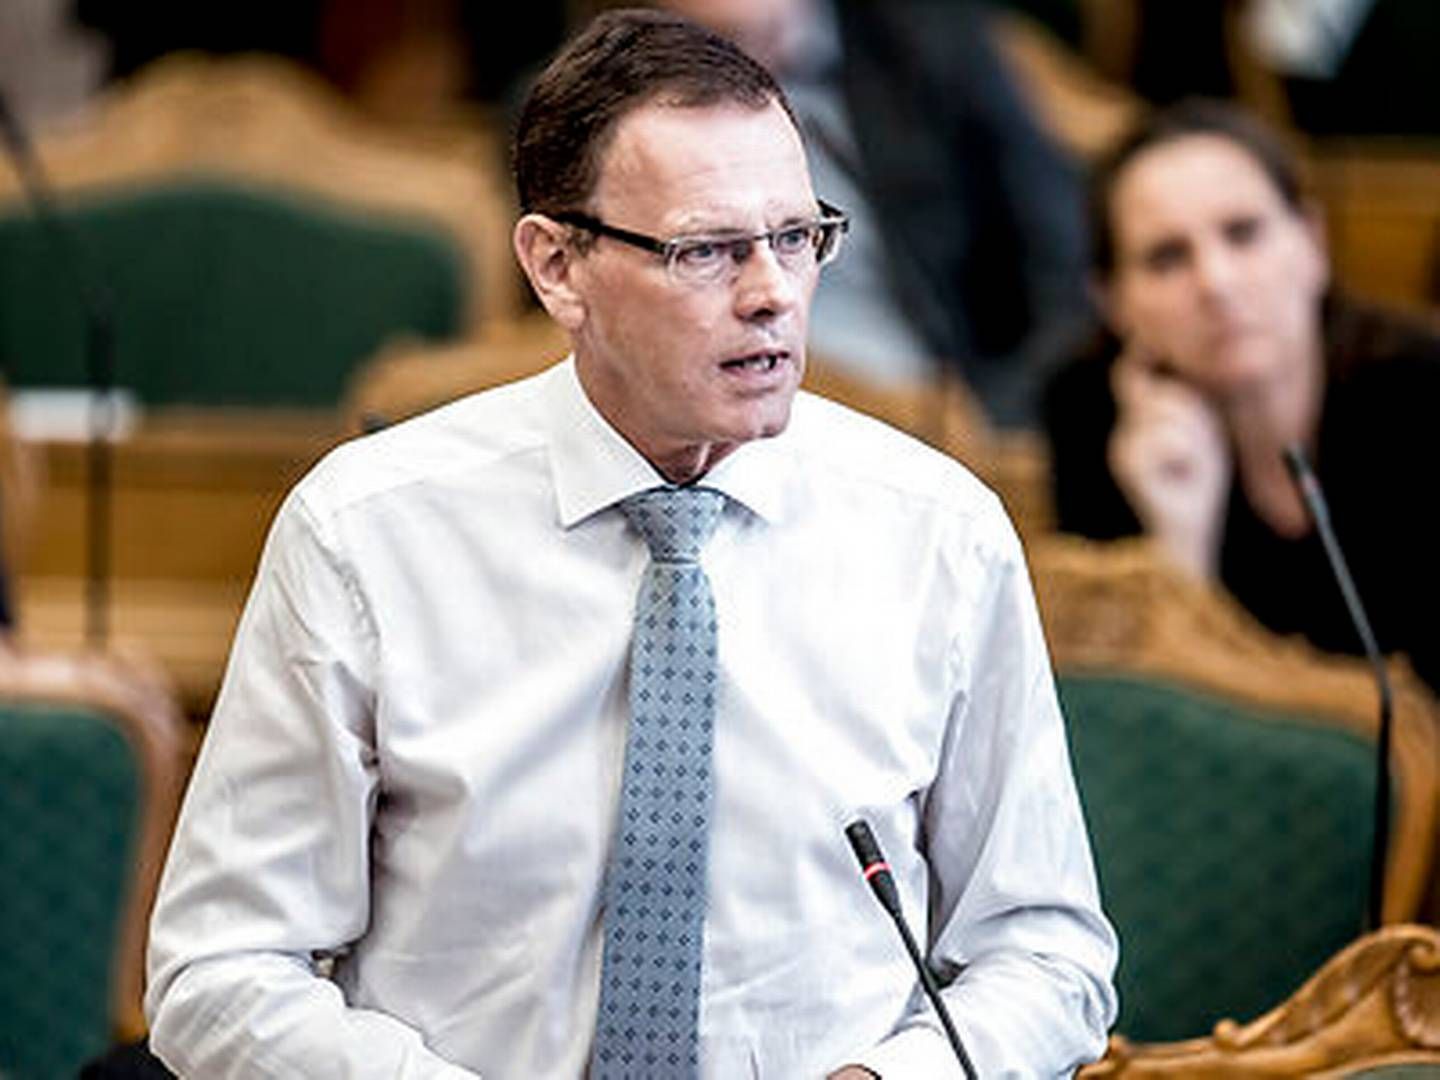 Erling Bonnesen beholder sit ordførerskab. | Foto: Mads Claus Rasmussen/Ritzau Scanpix